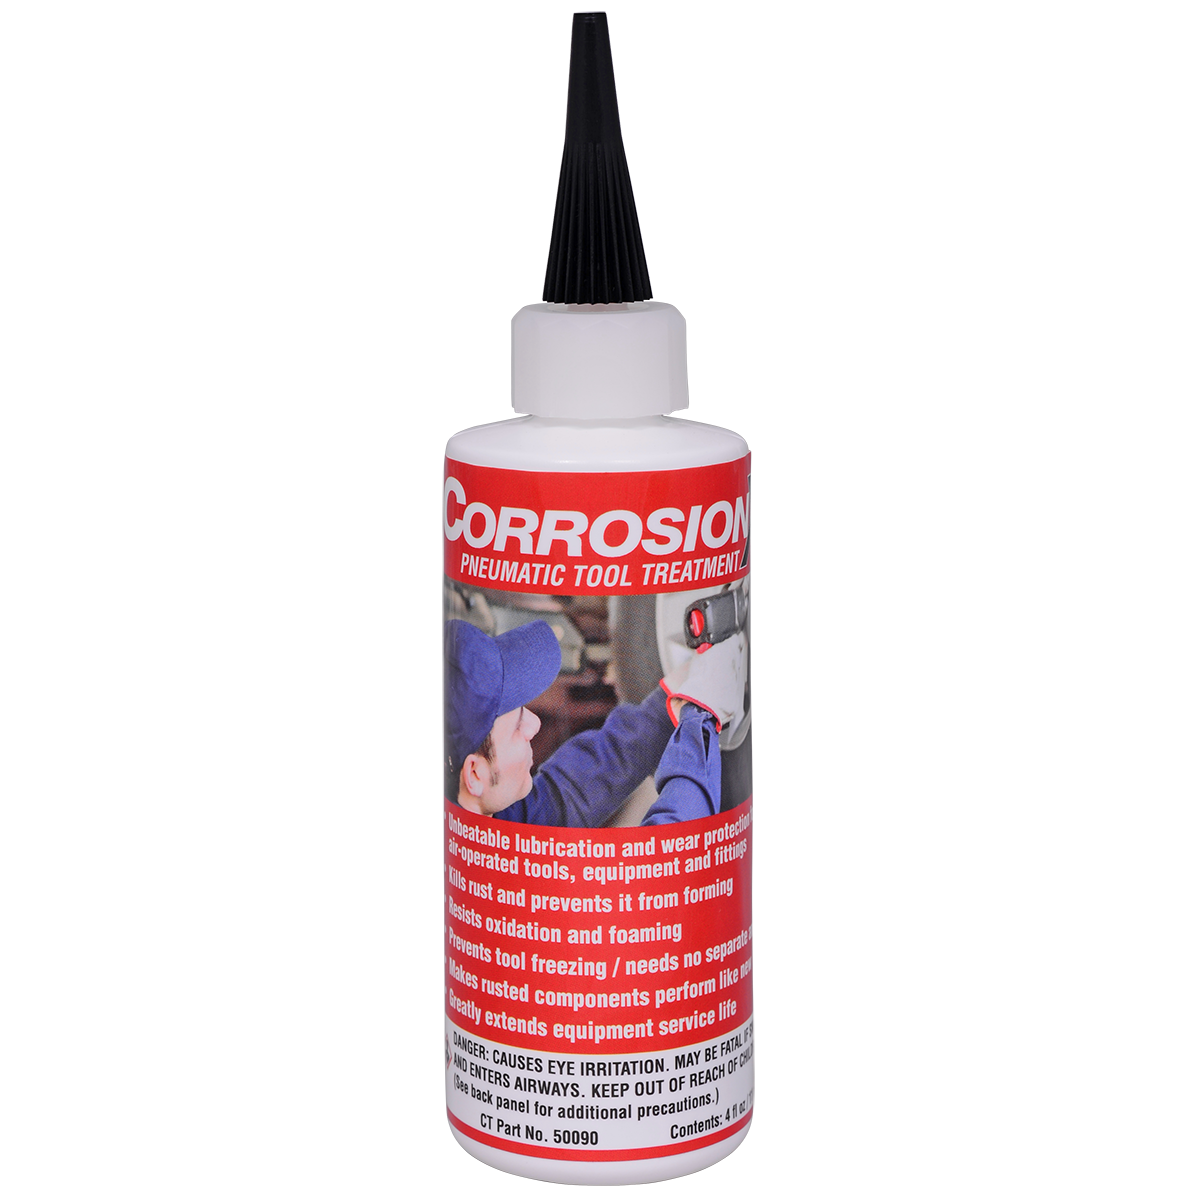 CorrosionX Air Tool Treatment